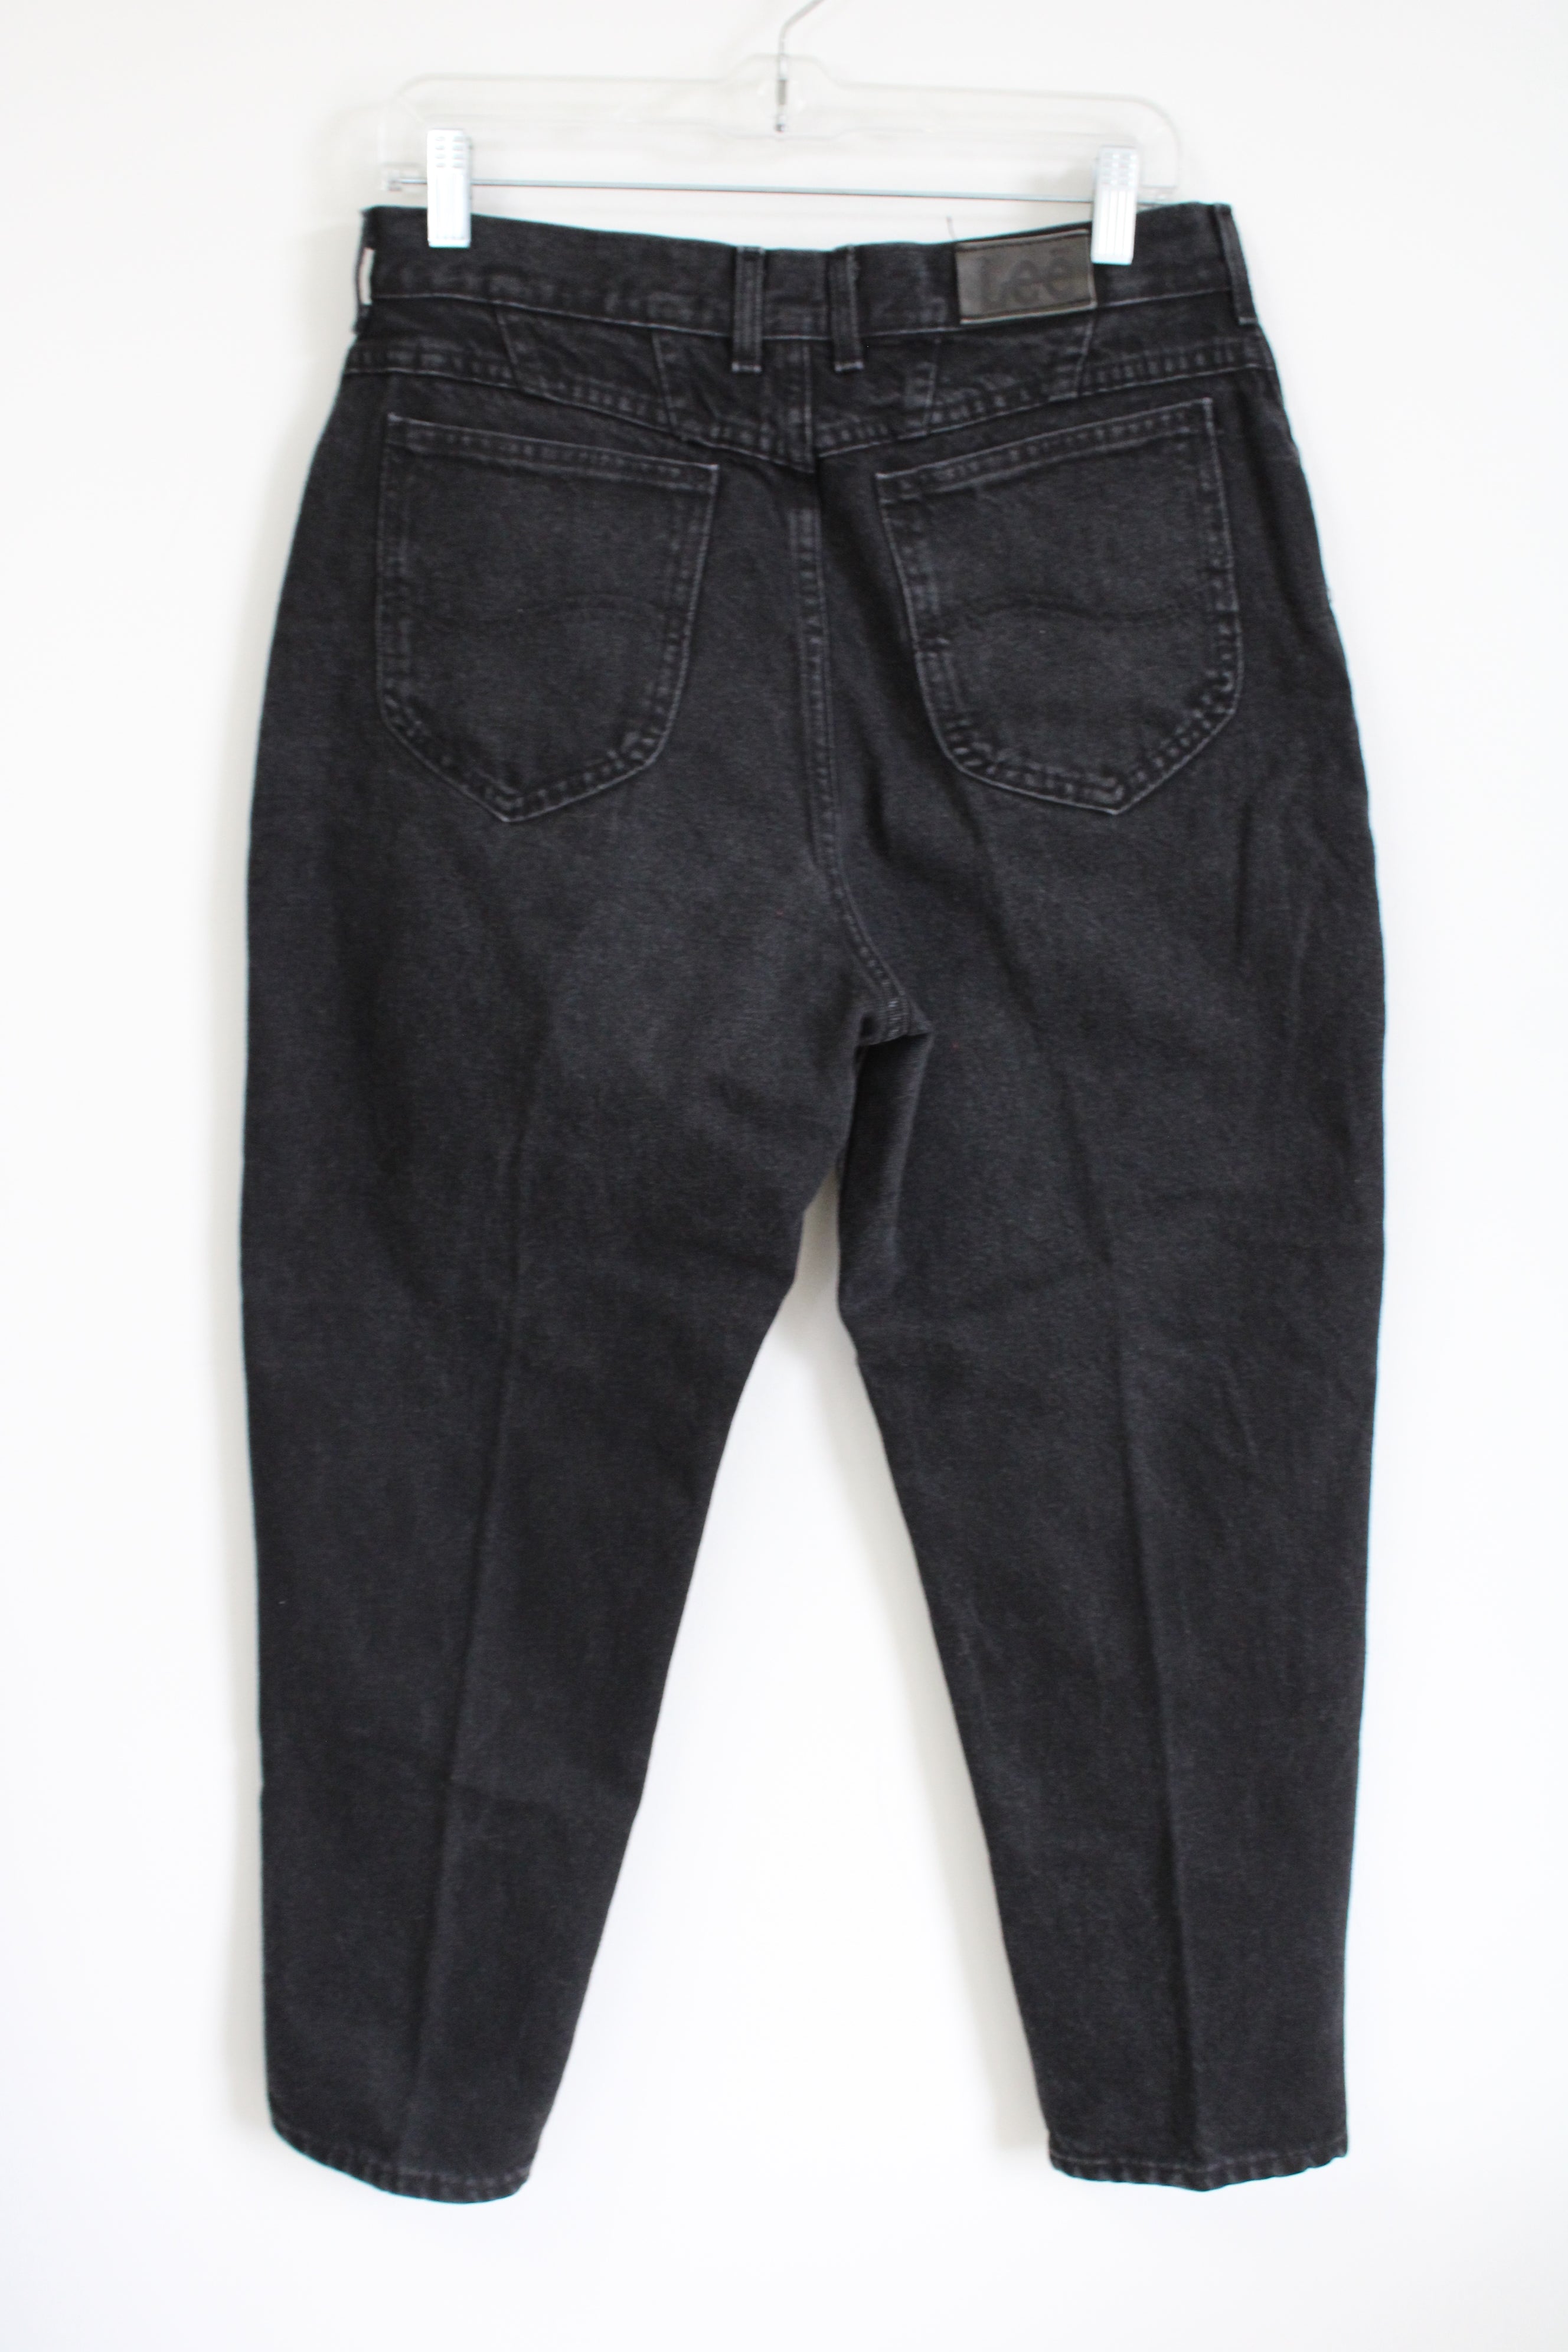 Vintage Lee Black Denim Jeans | 14 Petite